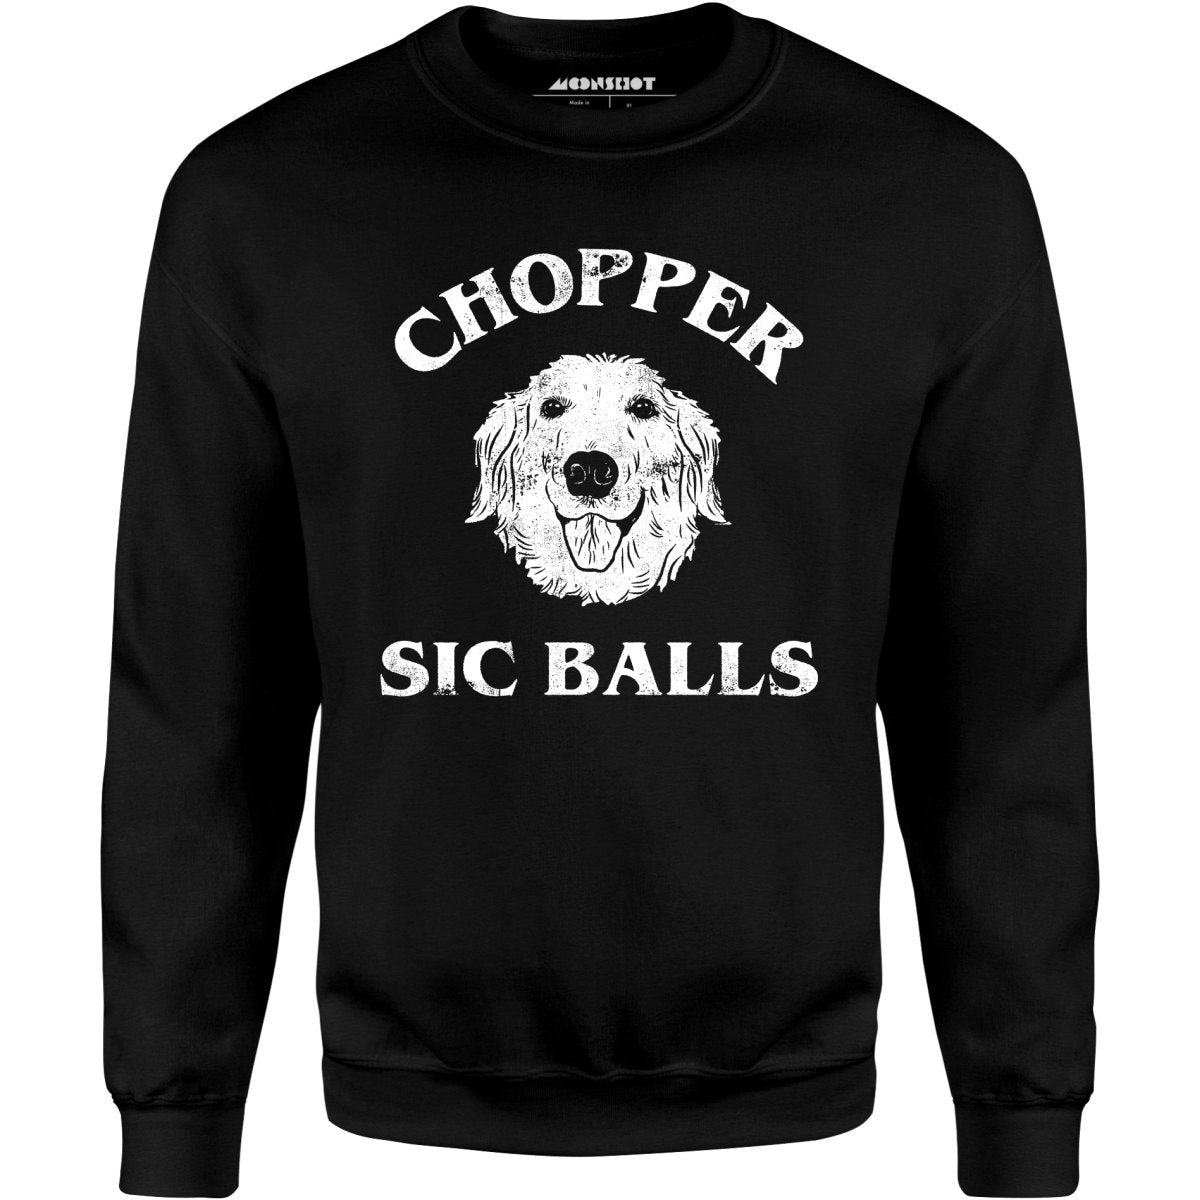 Chopper Sic Balls - Unisex Sweatshirt